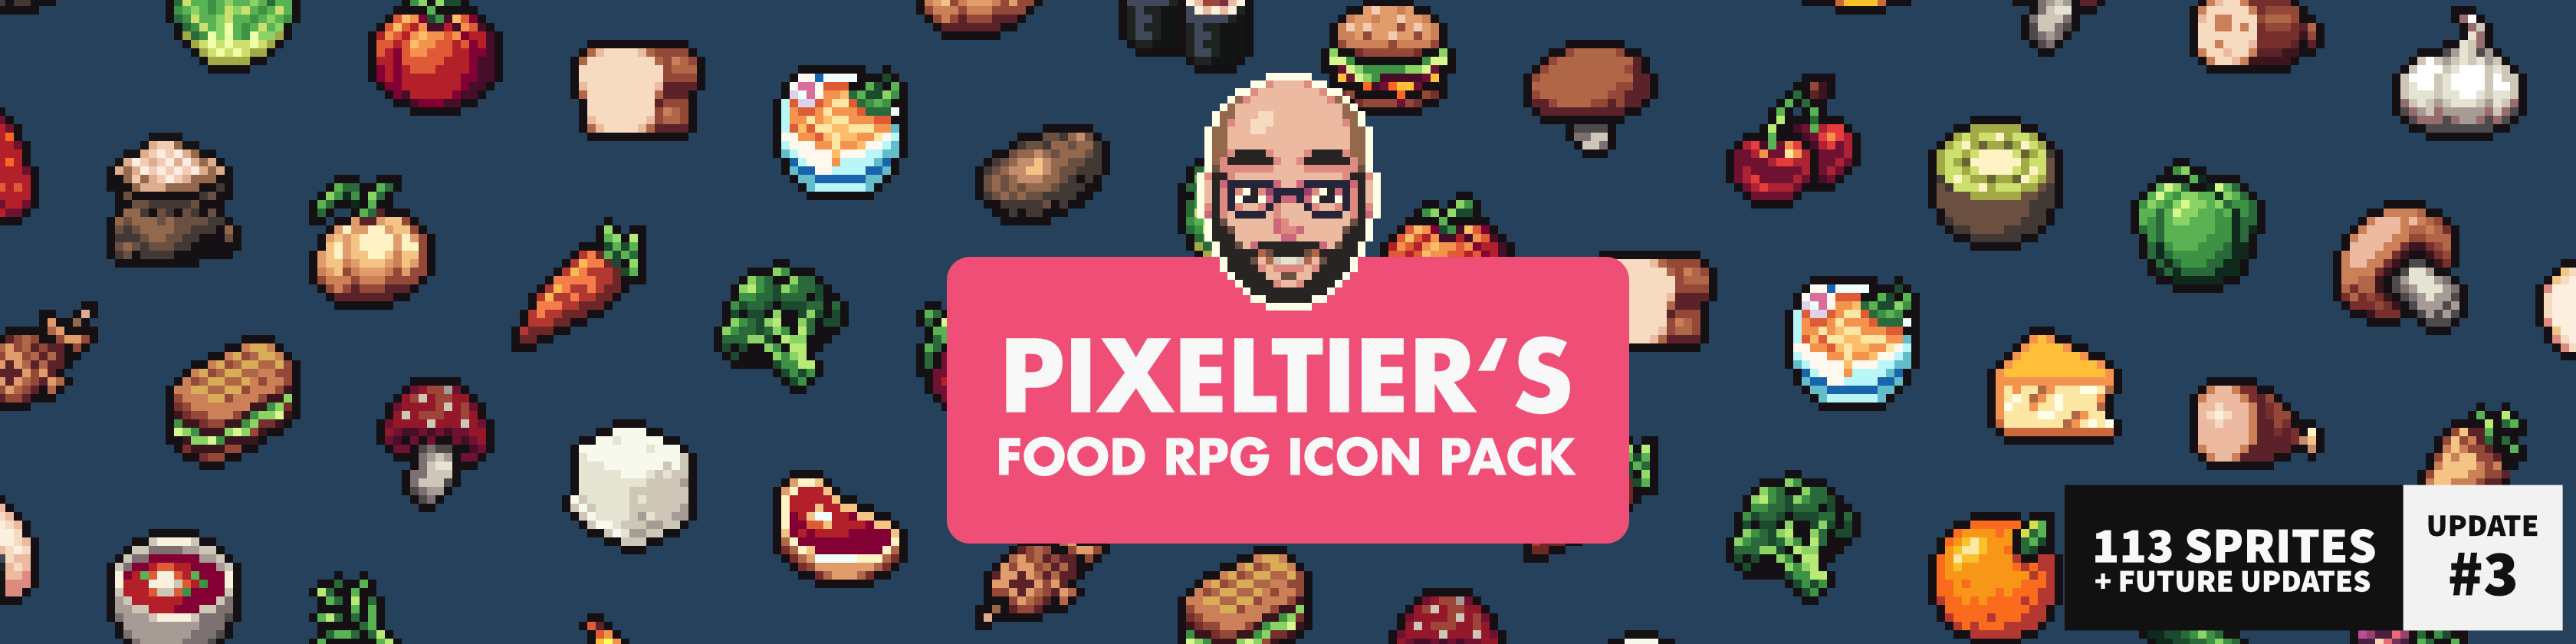 Pixeltier's 16x16 Food RPG Icon Pack /// Pixel Art